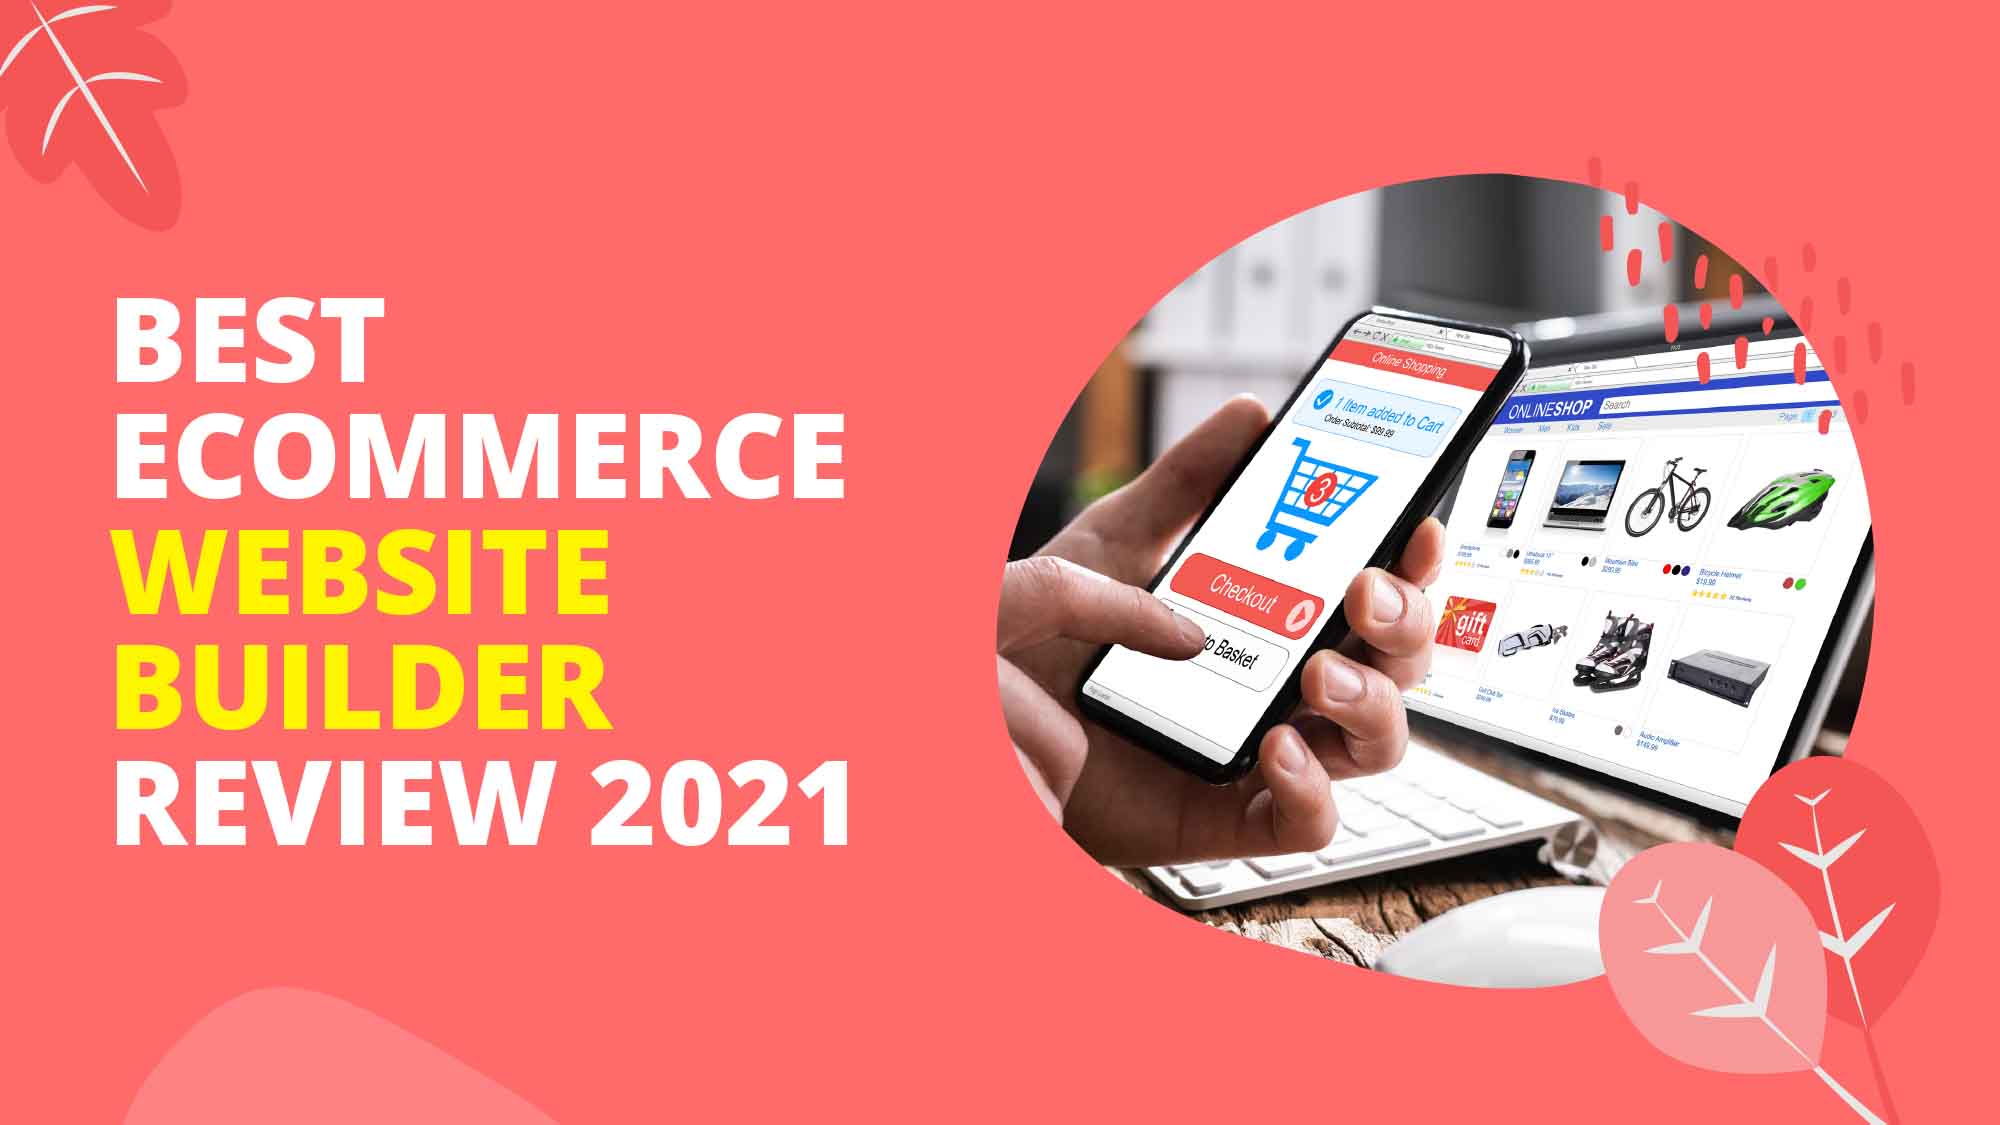 Best E-Commerce Website Builder Review 2021